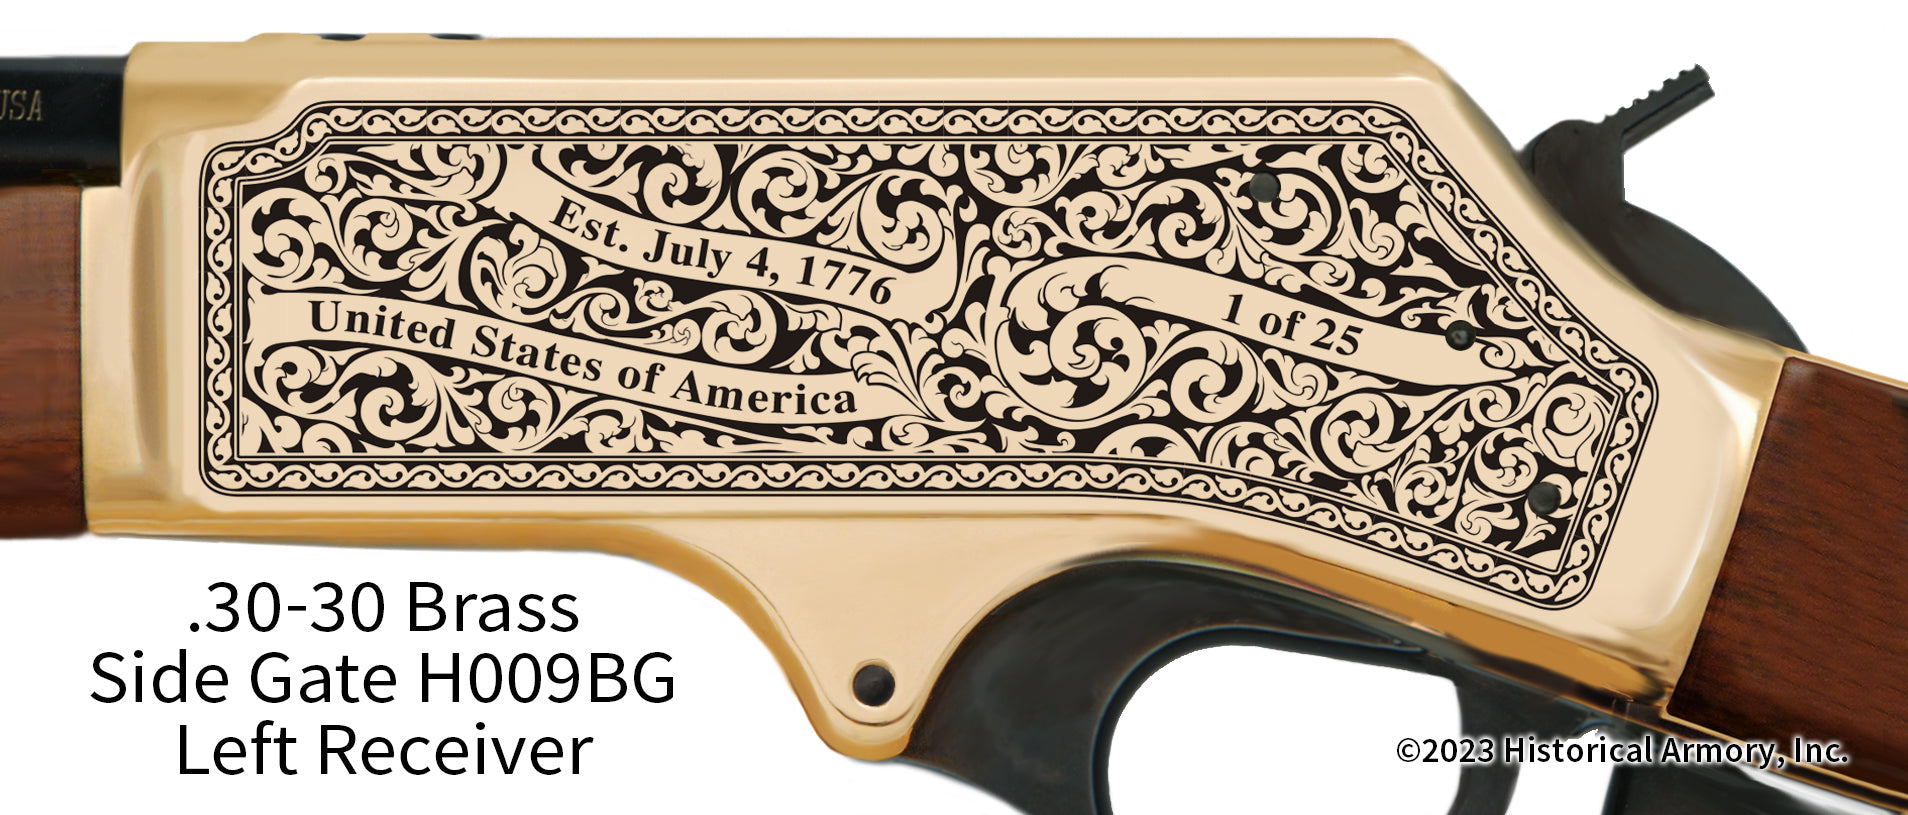 Cass County Minnesota Engraved Henry .30-30 Brass Side Gate Rifle